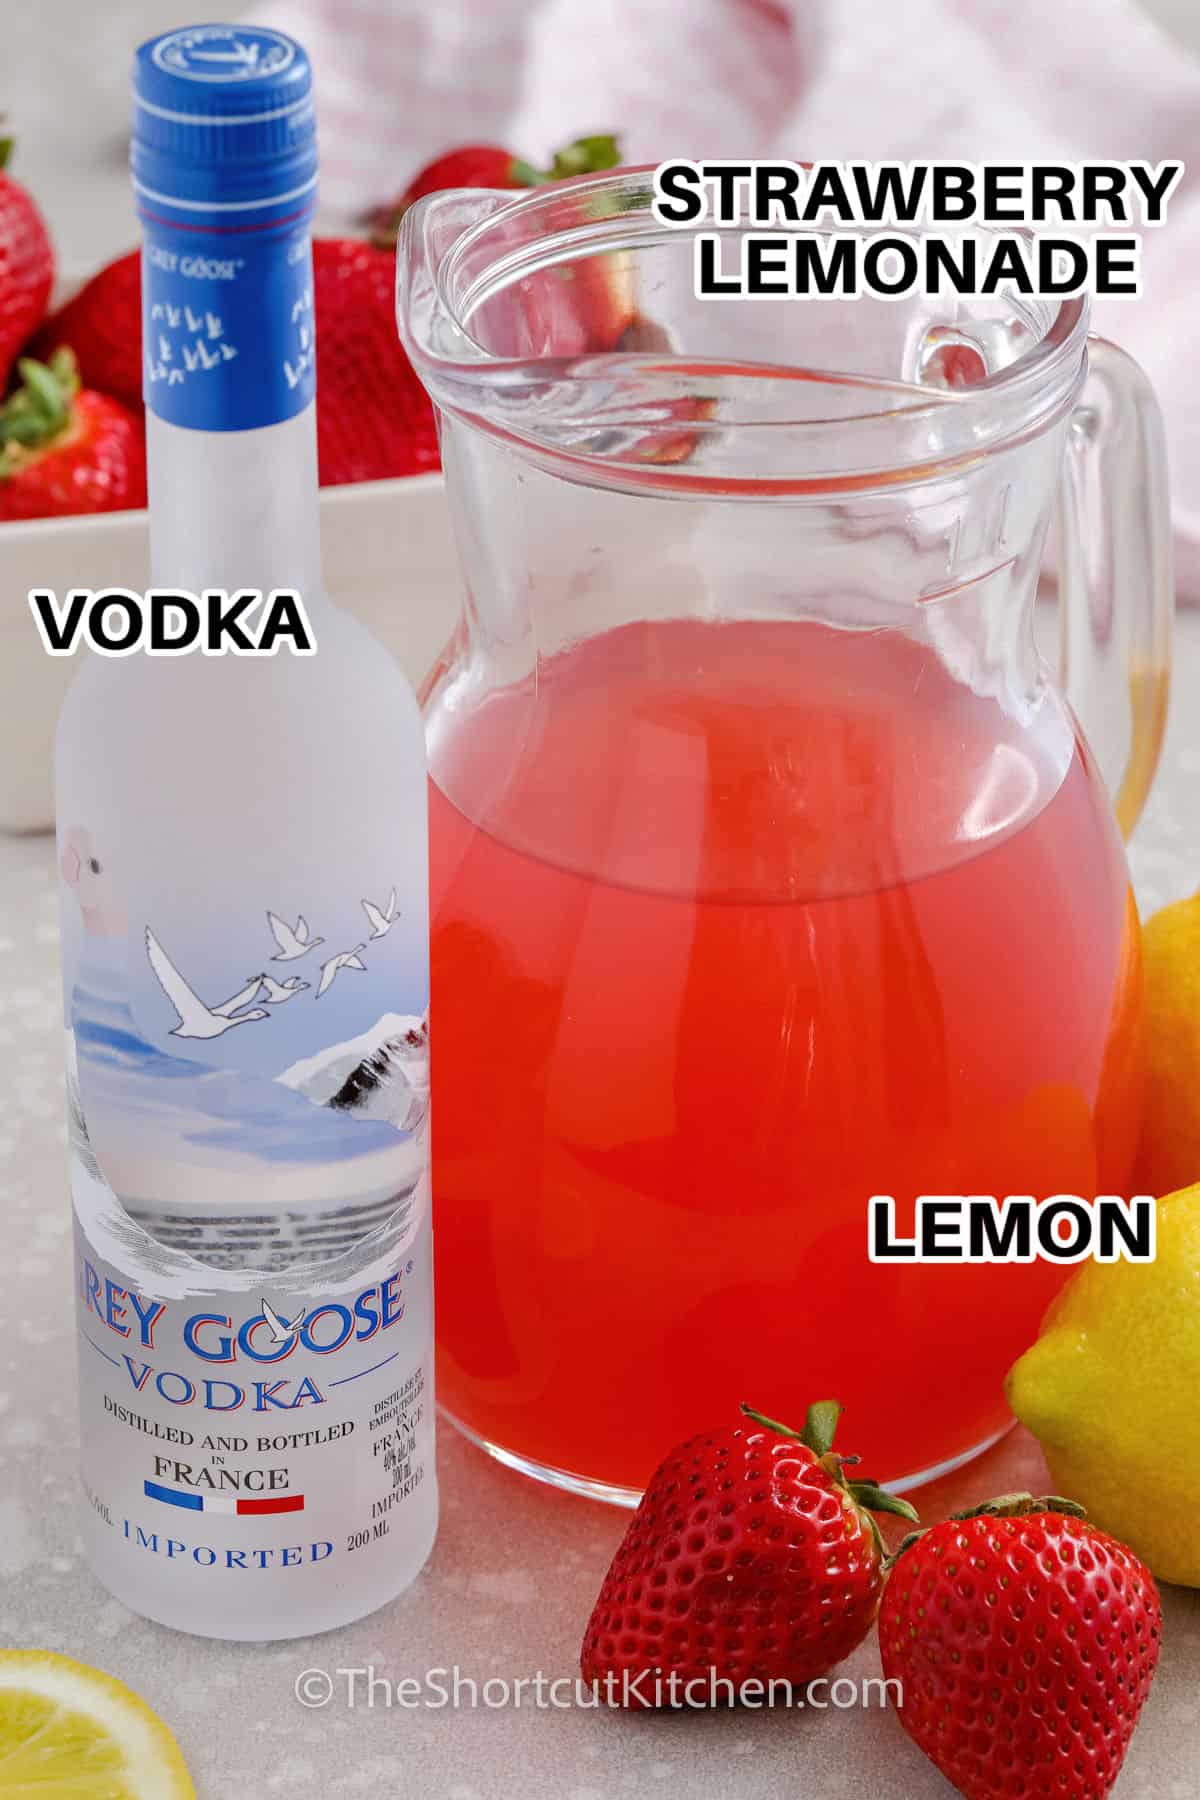 grey goose vodka , lemon and strawberry lemonade to make Strawberry Lemonade Vodka